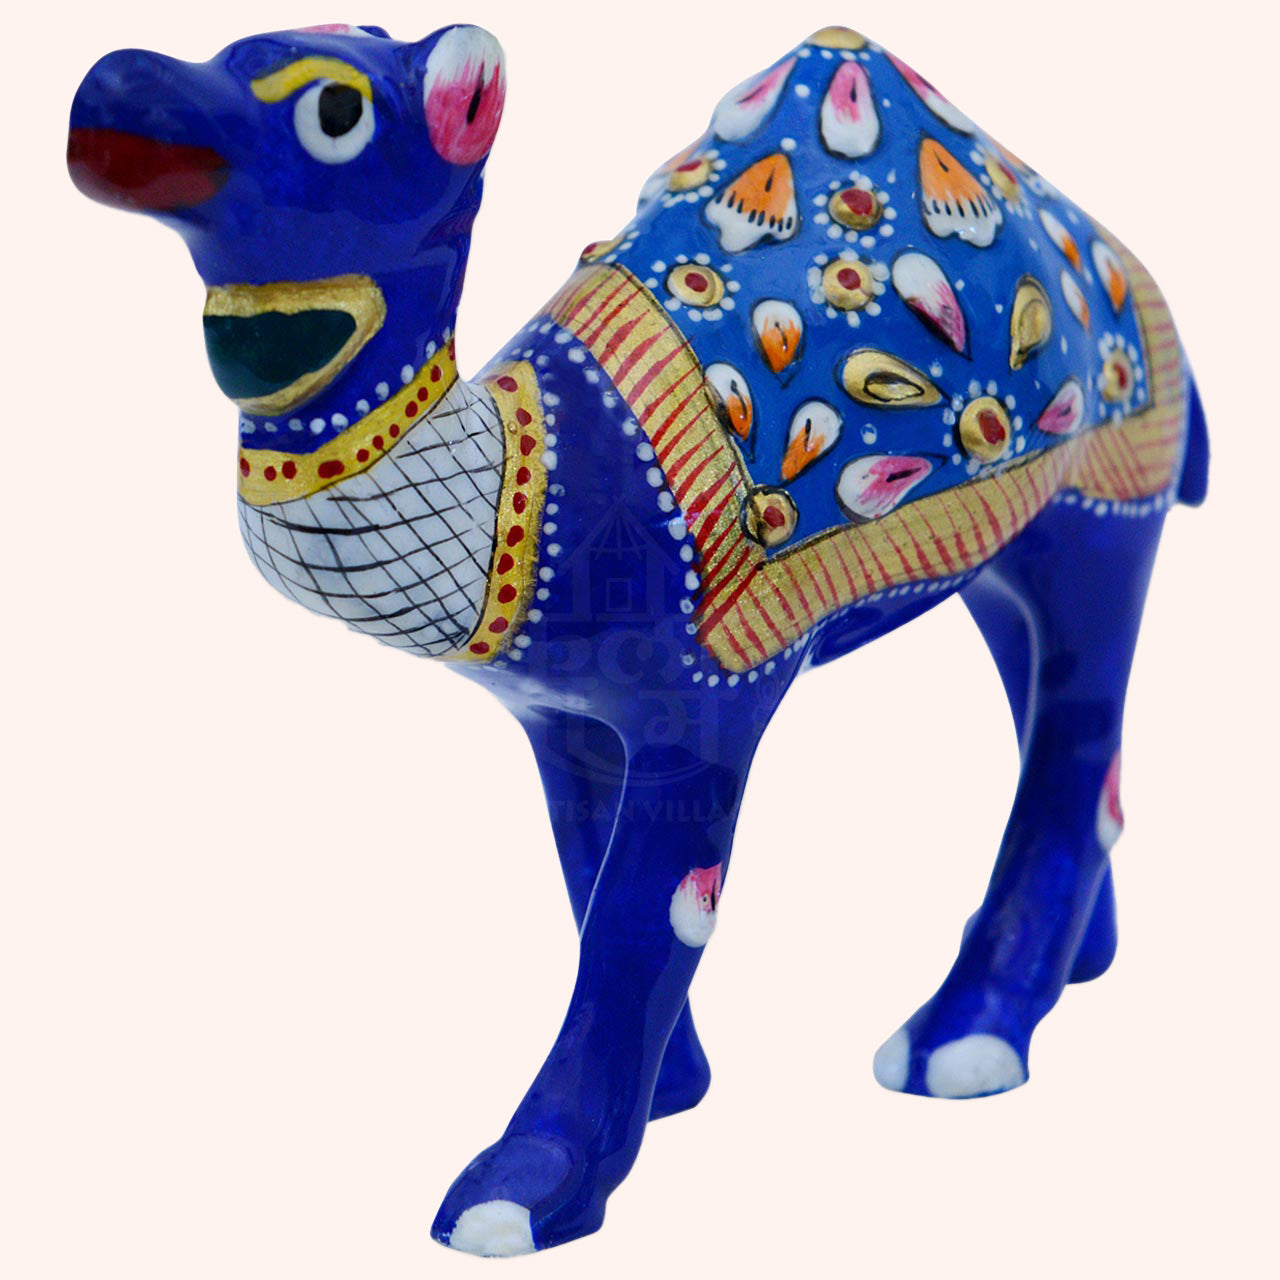 Handicraft Meenakari Work Metal Blue Camel Statue Home Office Decor Item Gift